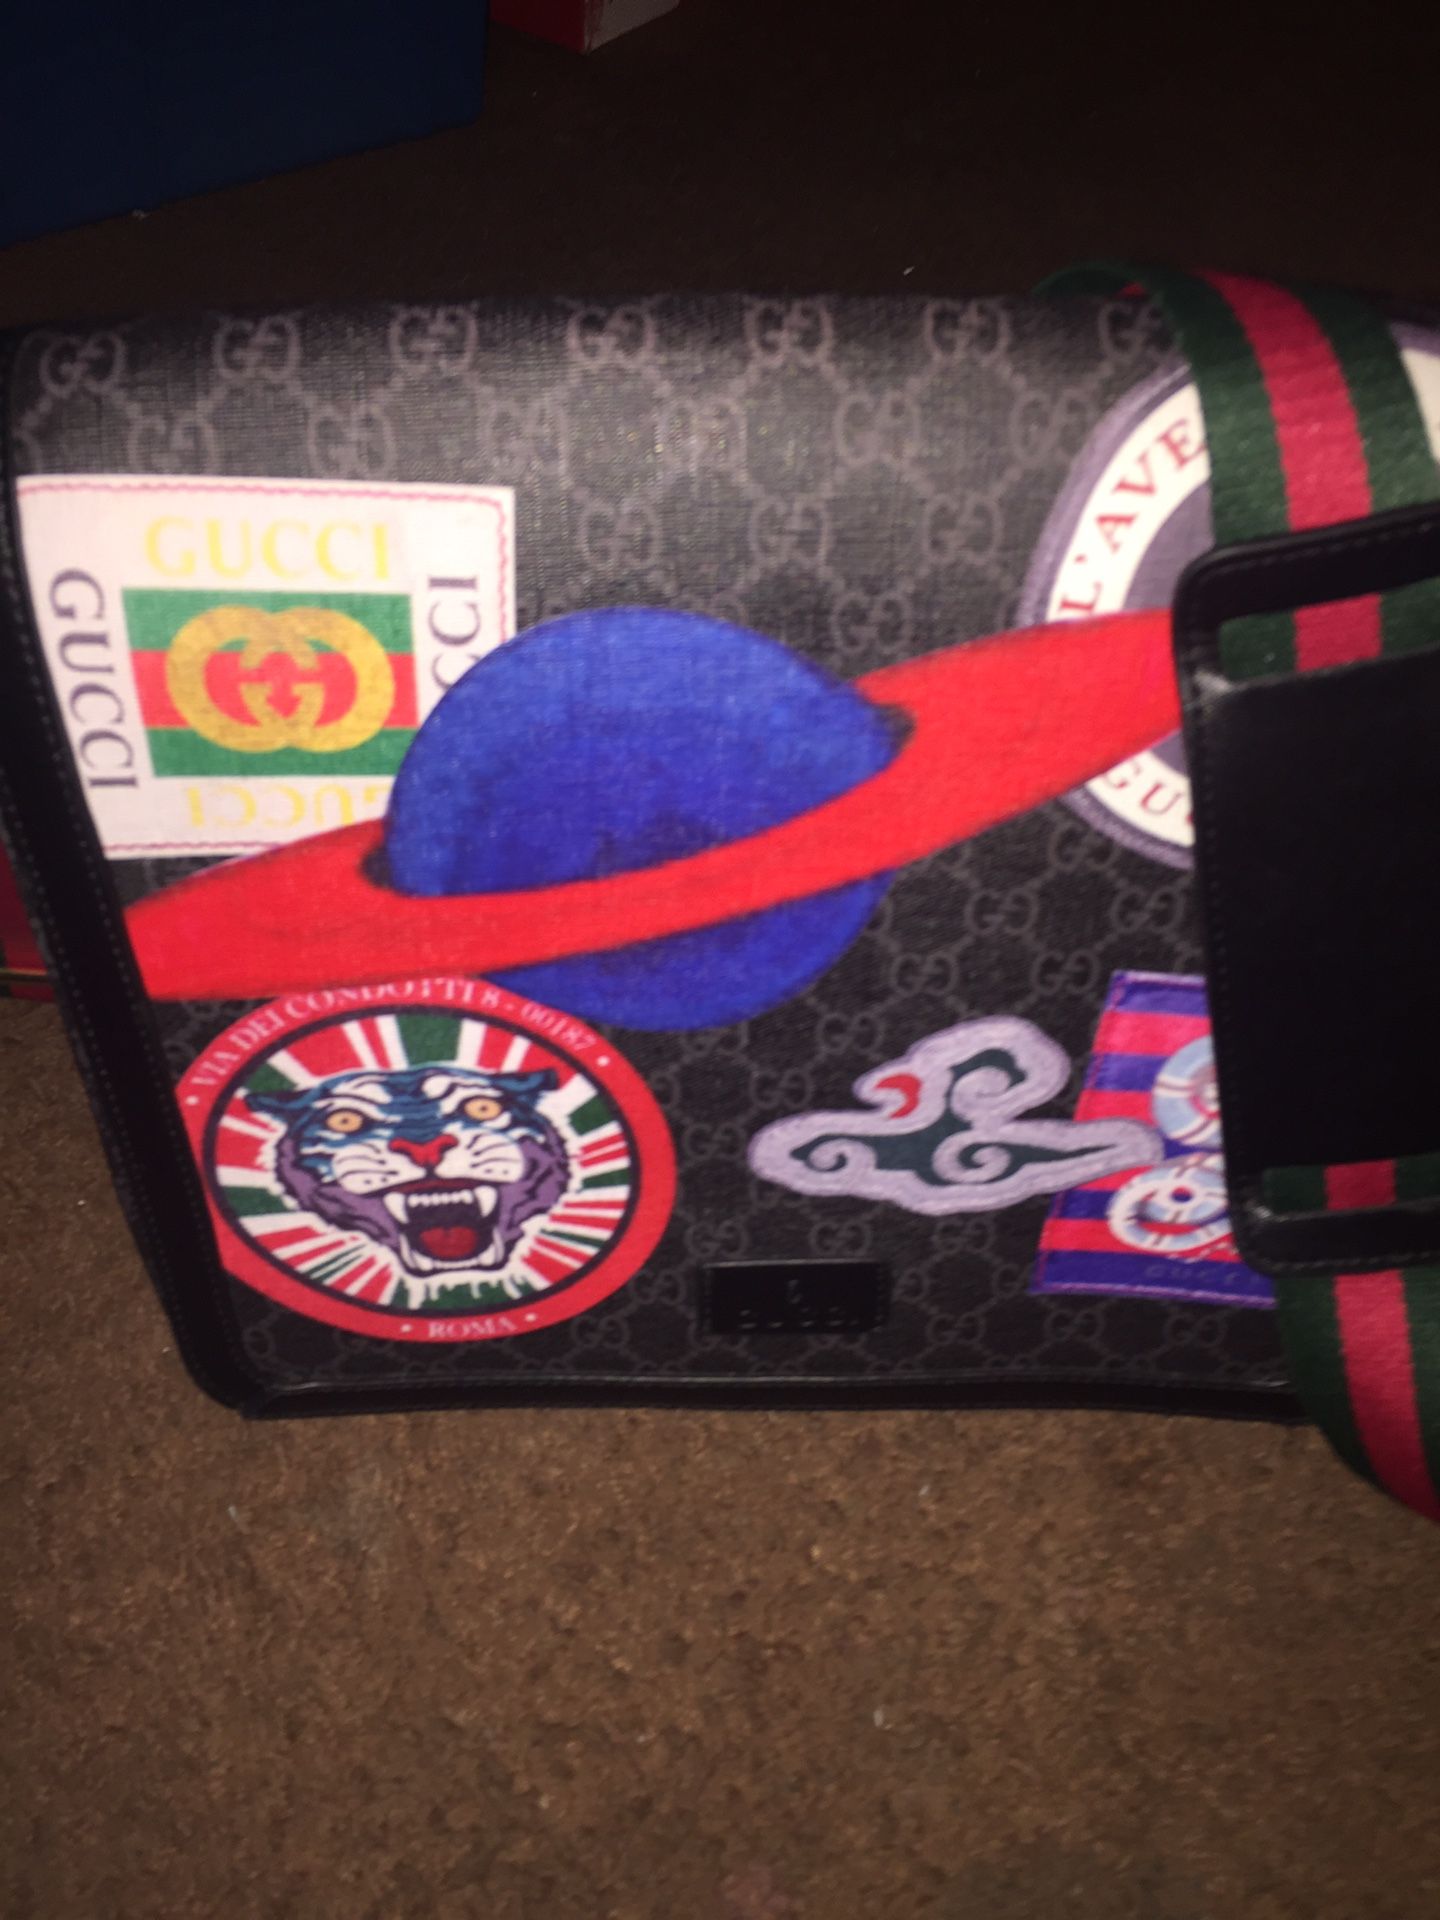 Gucci messenger bag